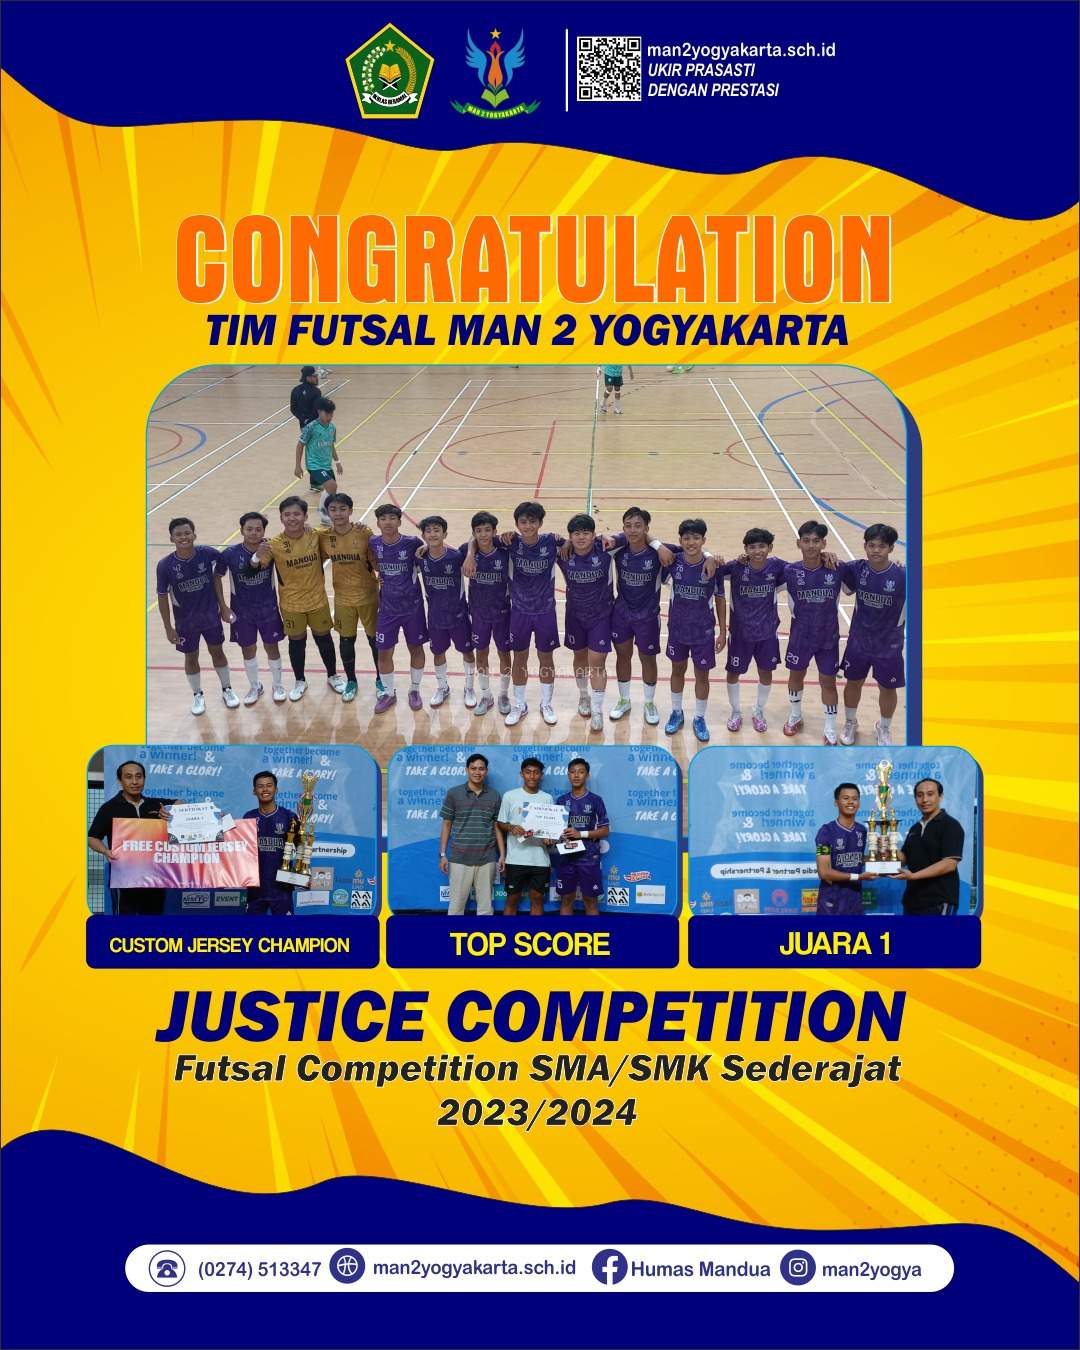 TIM FUTSAL MAN 2 YOGYAKARTA JUARA  1 DALAM KOMPETISI JUSTICE COMPETITION 2023/2024